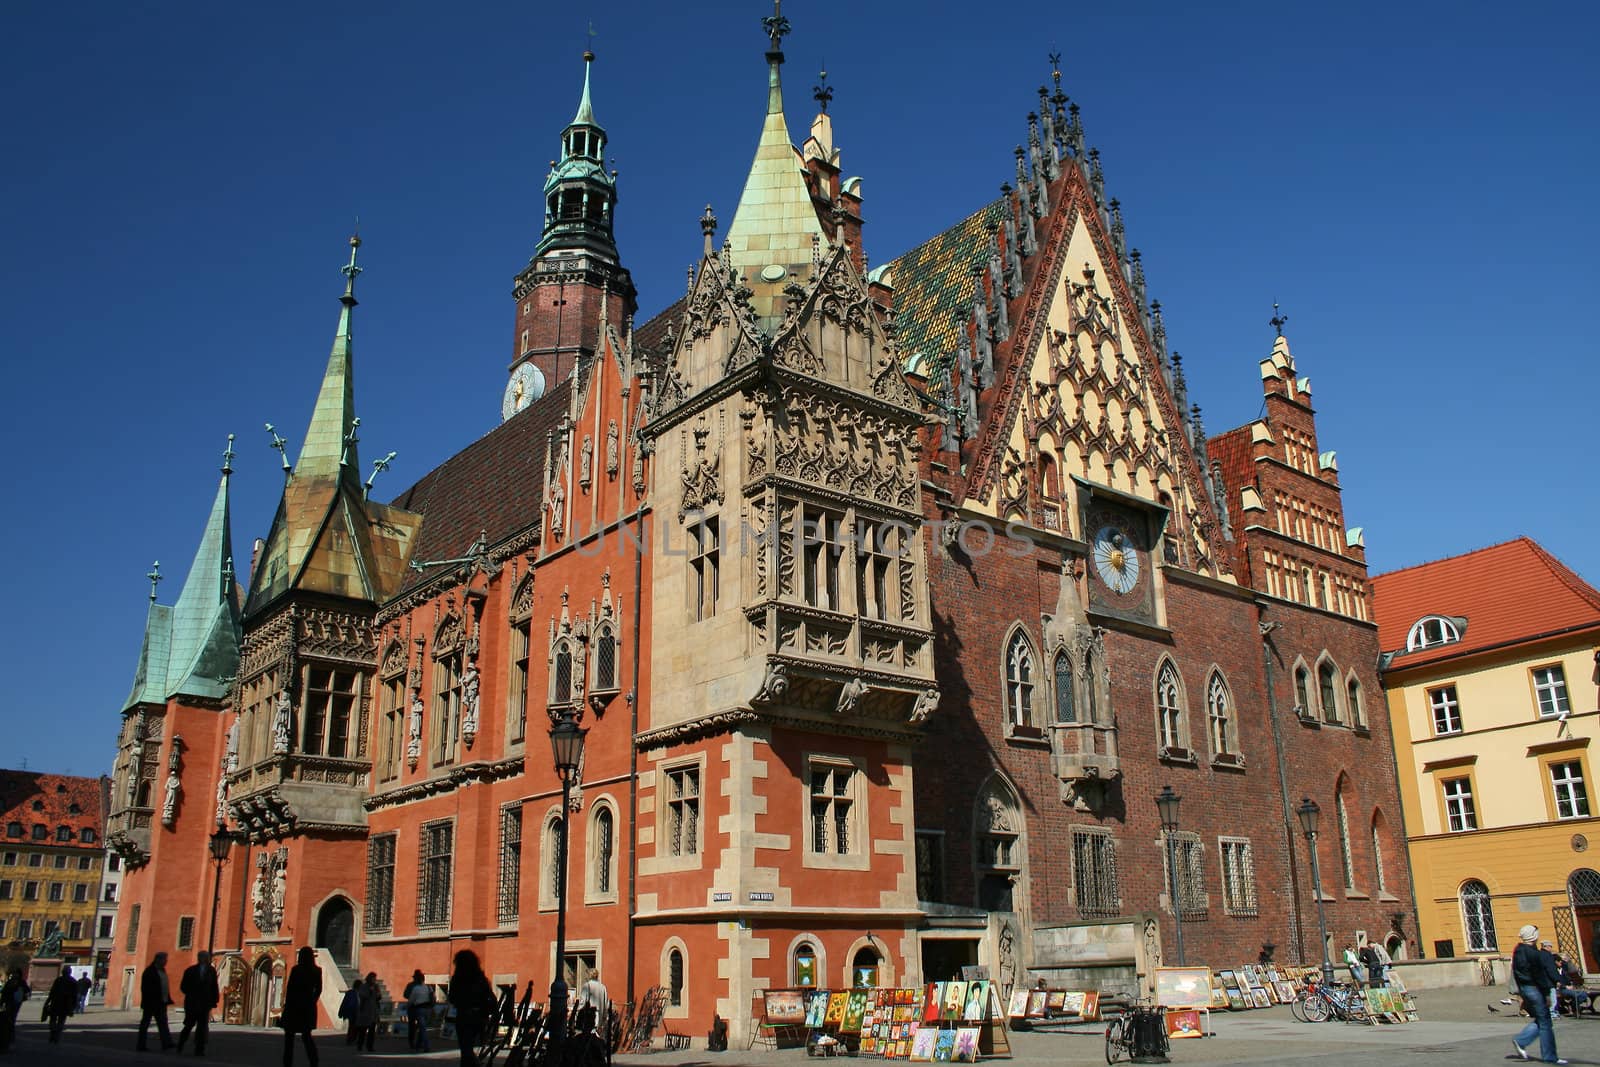 Rynek in Wroclaw, Poland - main square